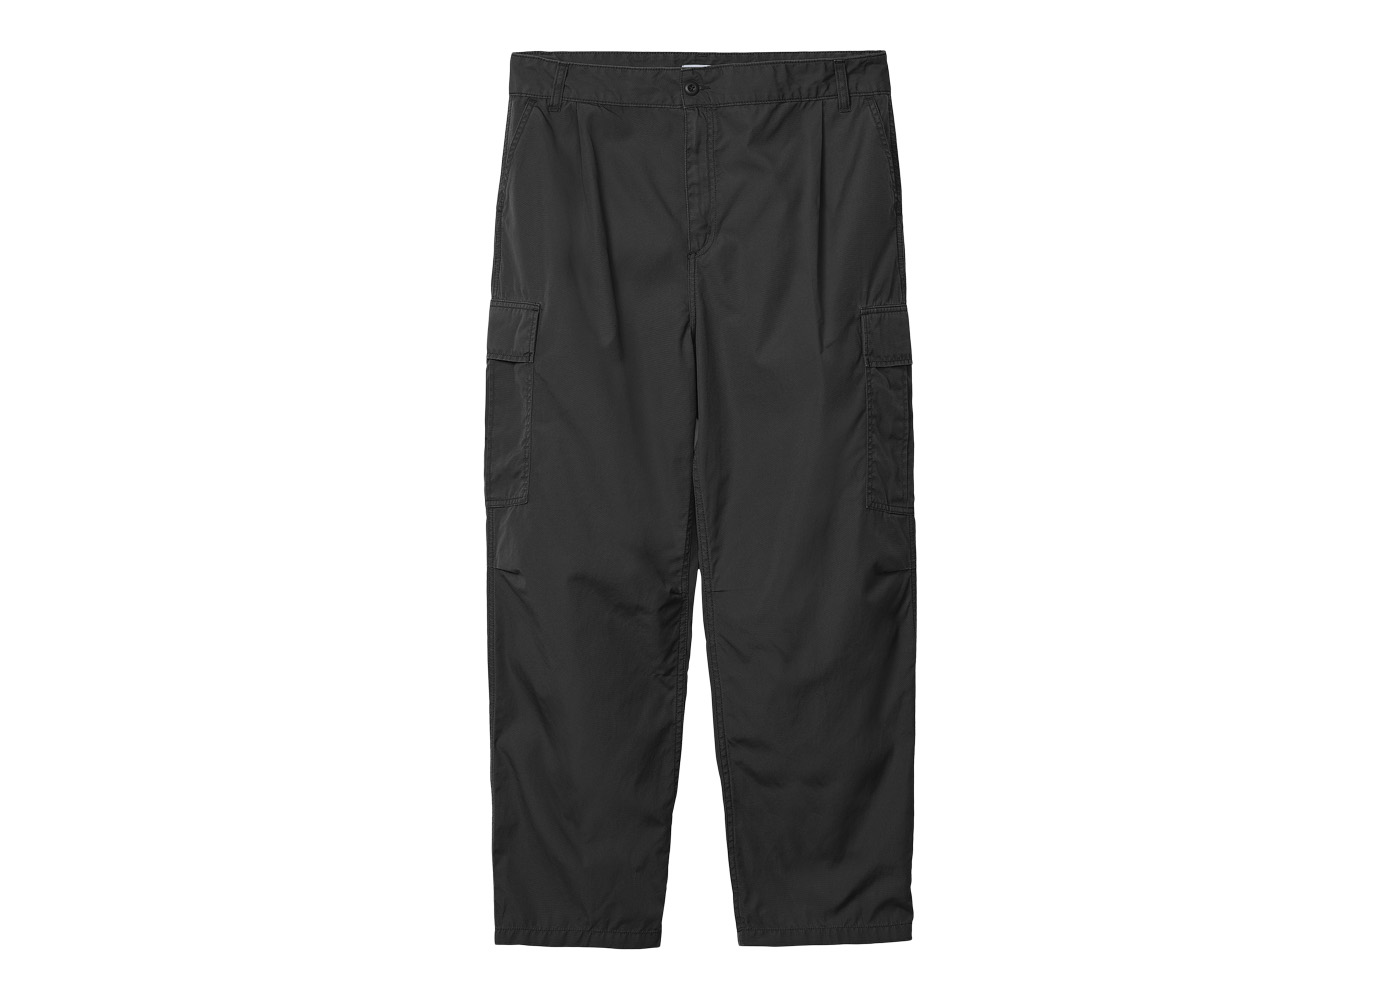 Carhartt Wip Regular ripstop cargo pants - black rinsed